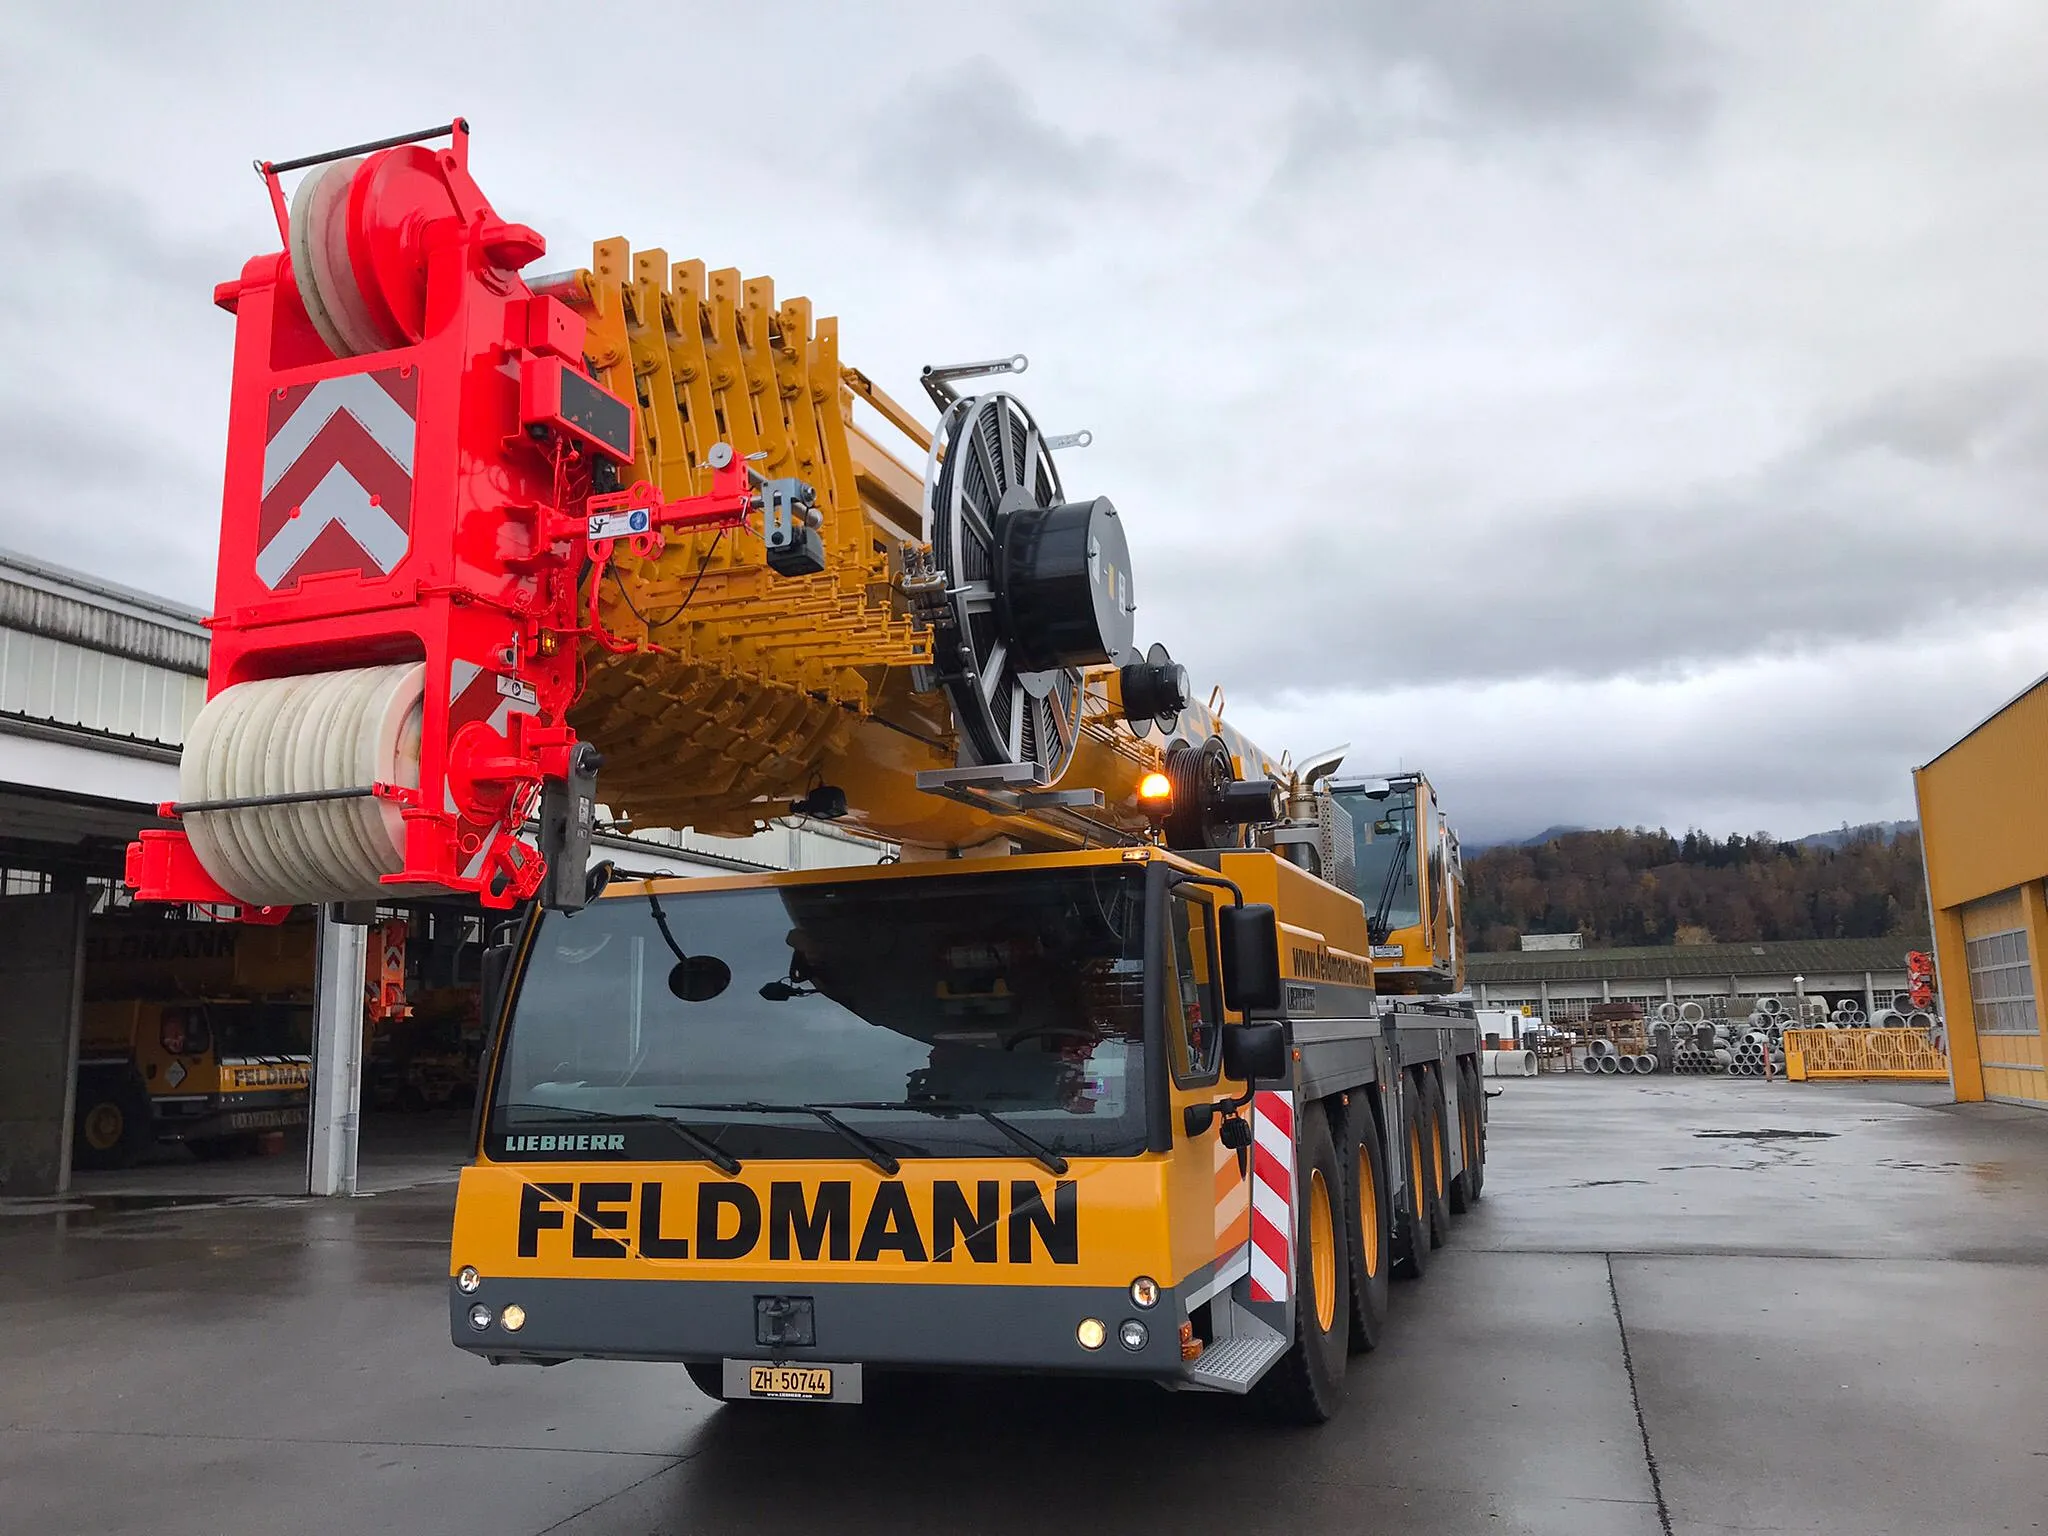 Feldmann Pneukran + Transport AG